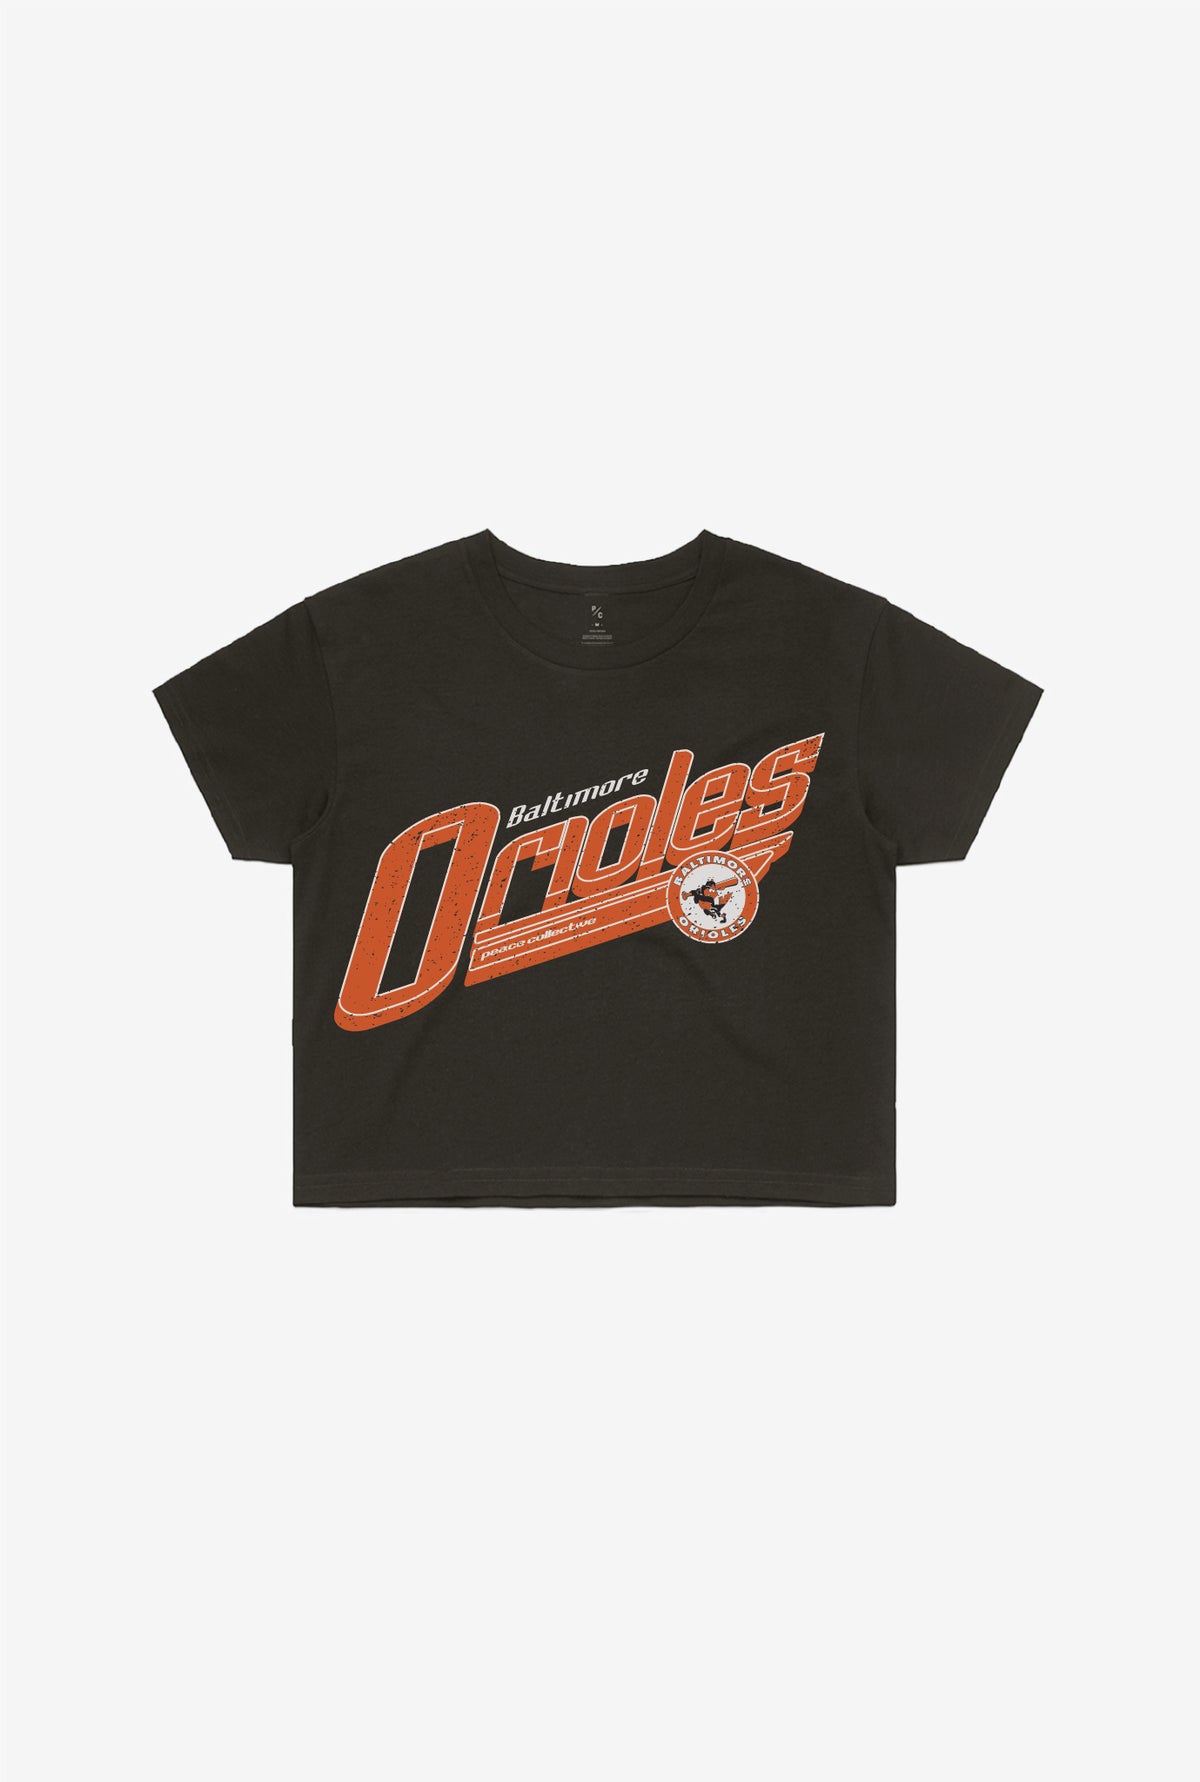 Baltimore Orioles Vintage Cropped T-Shirt - Black